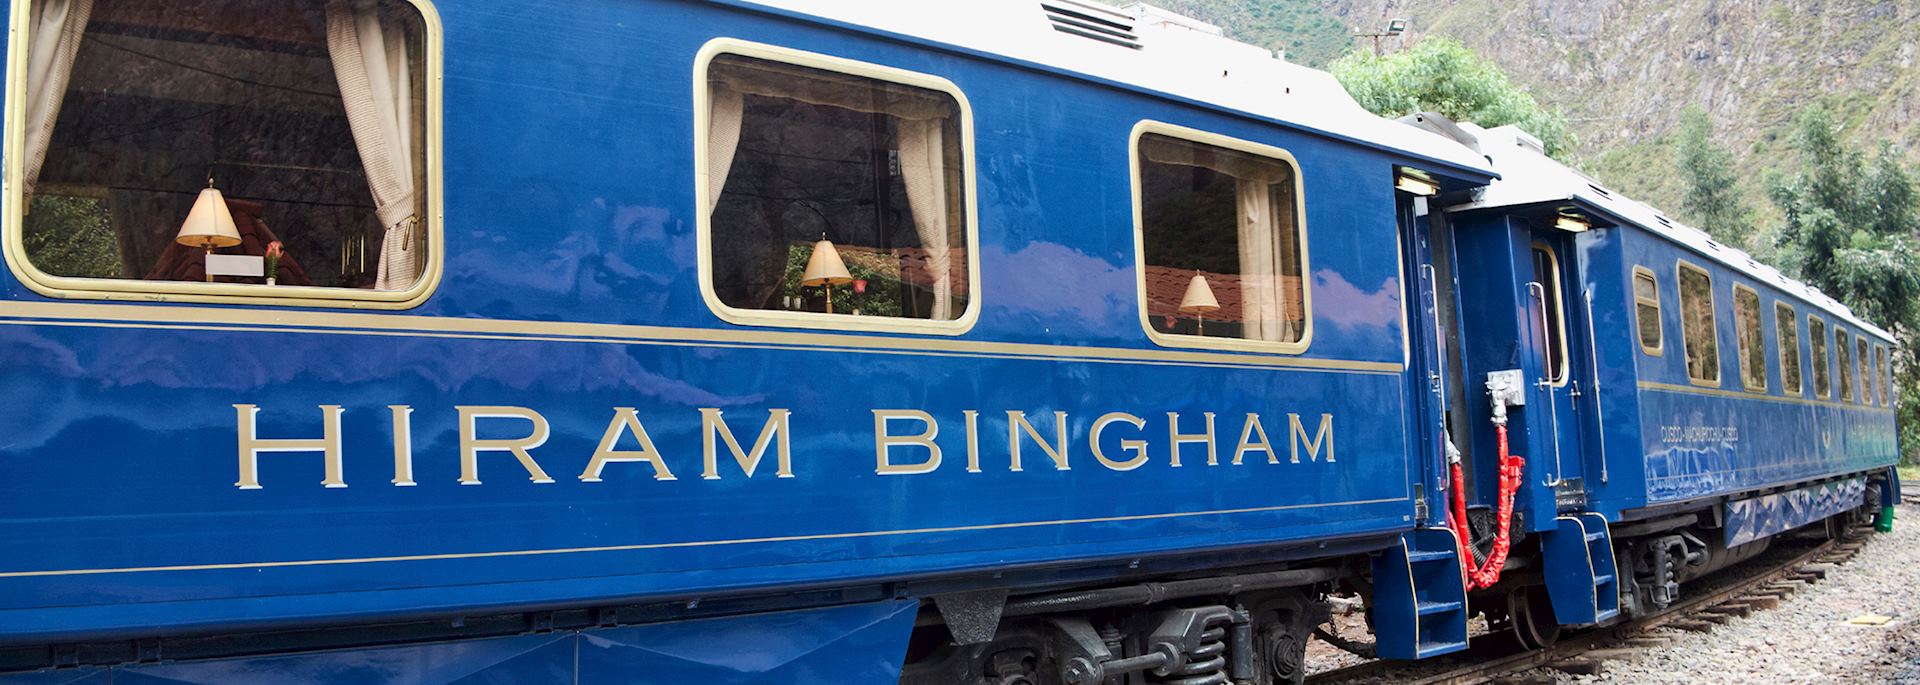 Hiram Bingham train, South America